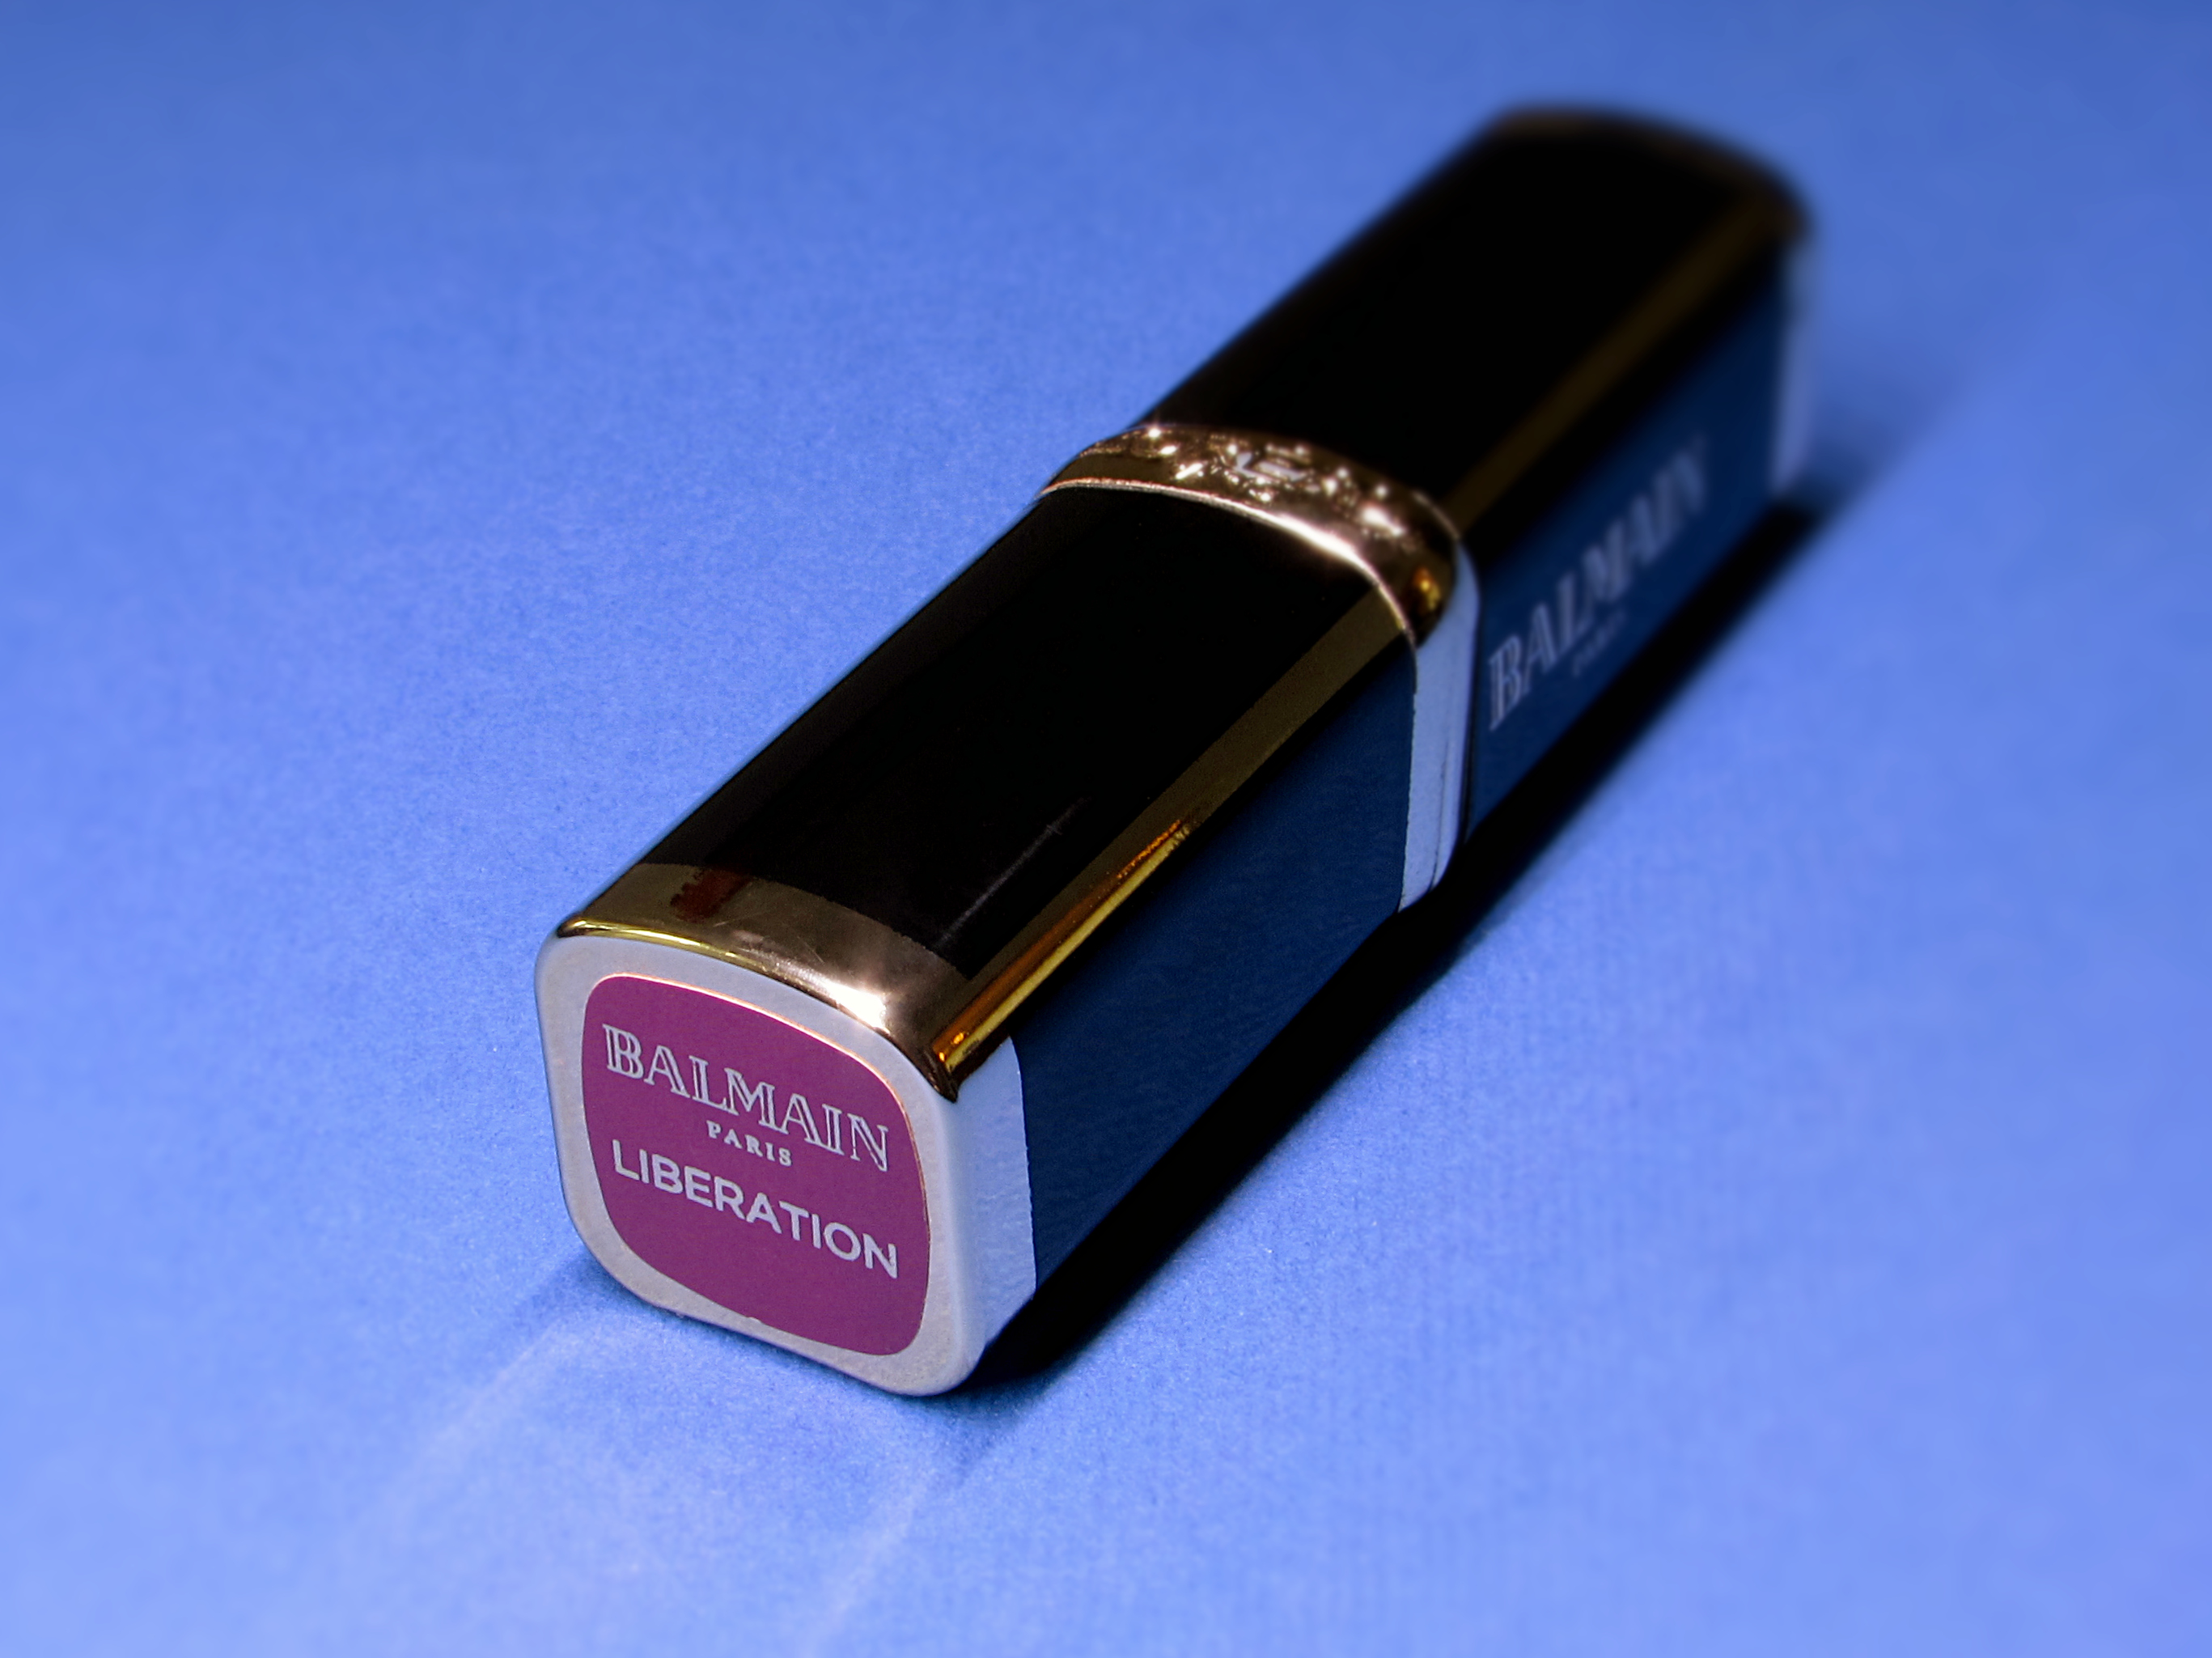 L’Oréal Paris x Balmain Color Riche limited edition purple lipstick in 468 Liberation closed on a blue background.